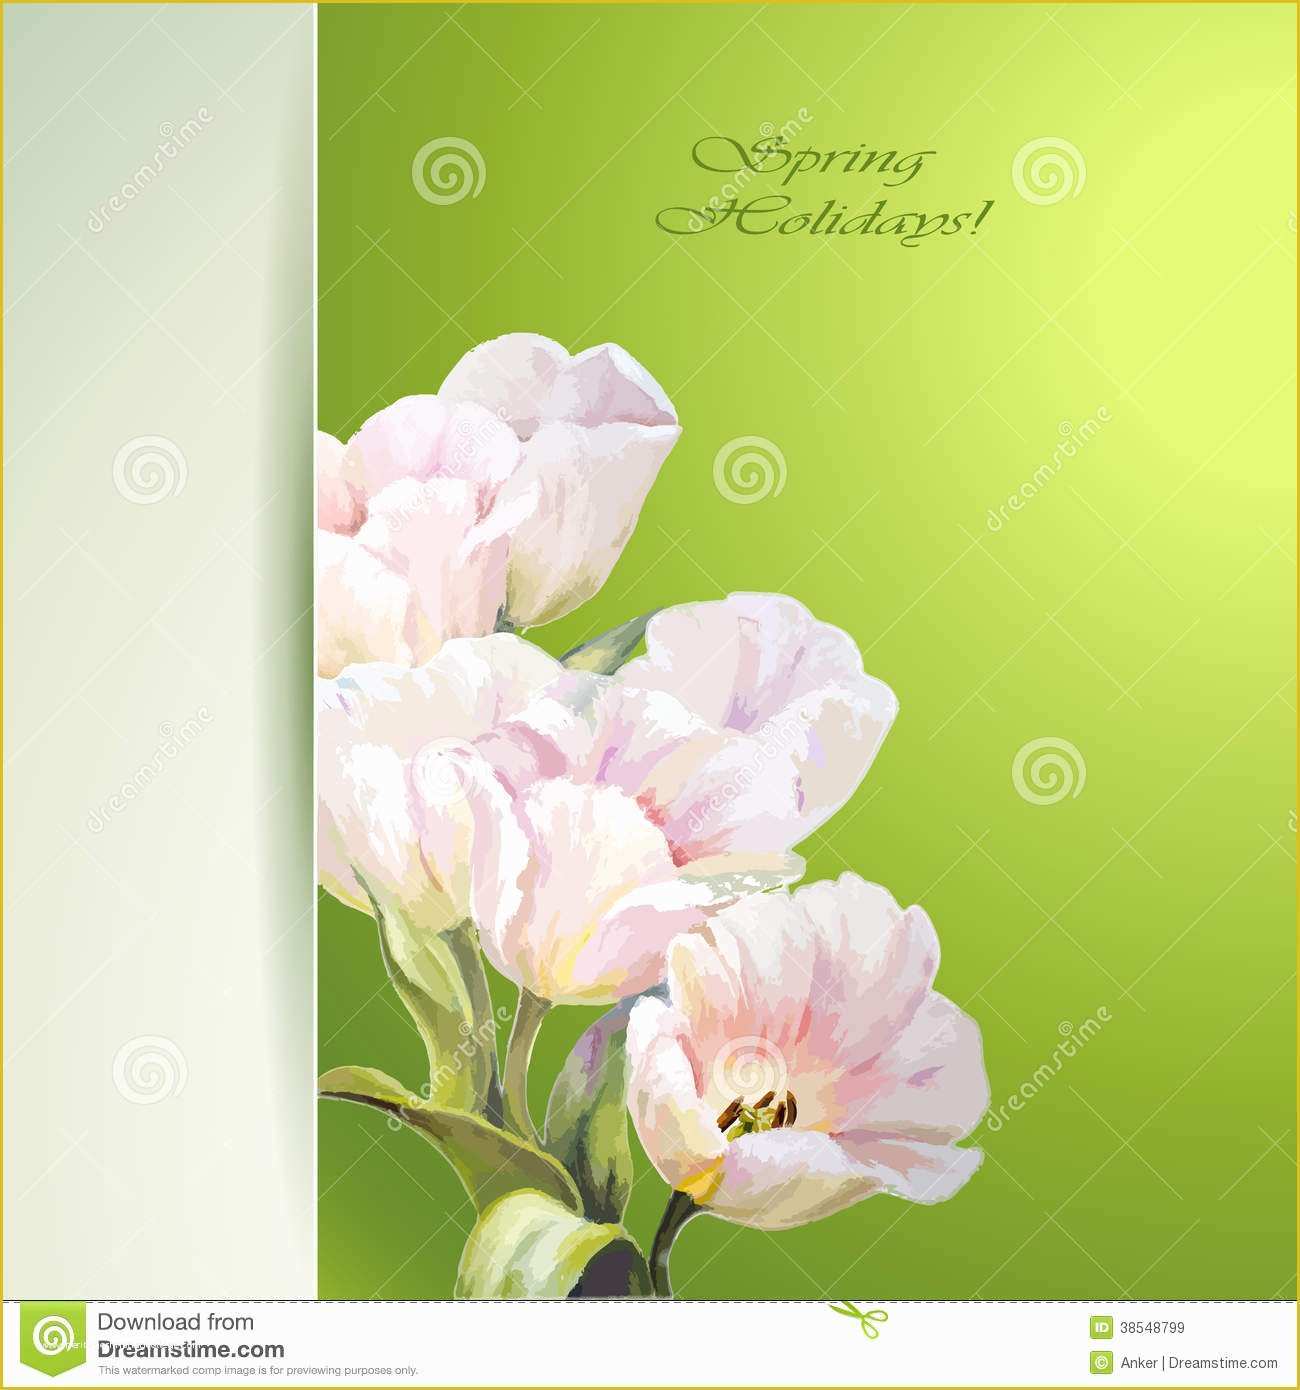 Spring Invitation Templates Free Of Tulips Spring Flowers Invitation Template Card Royalty